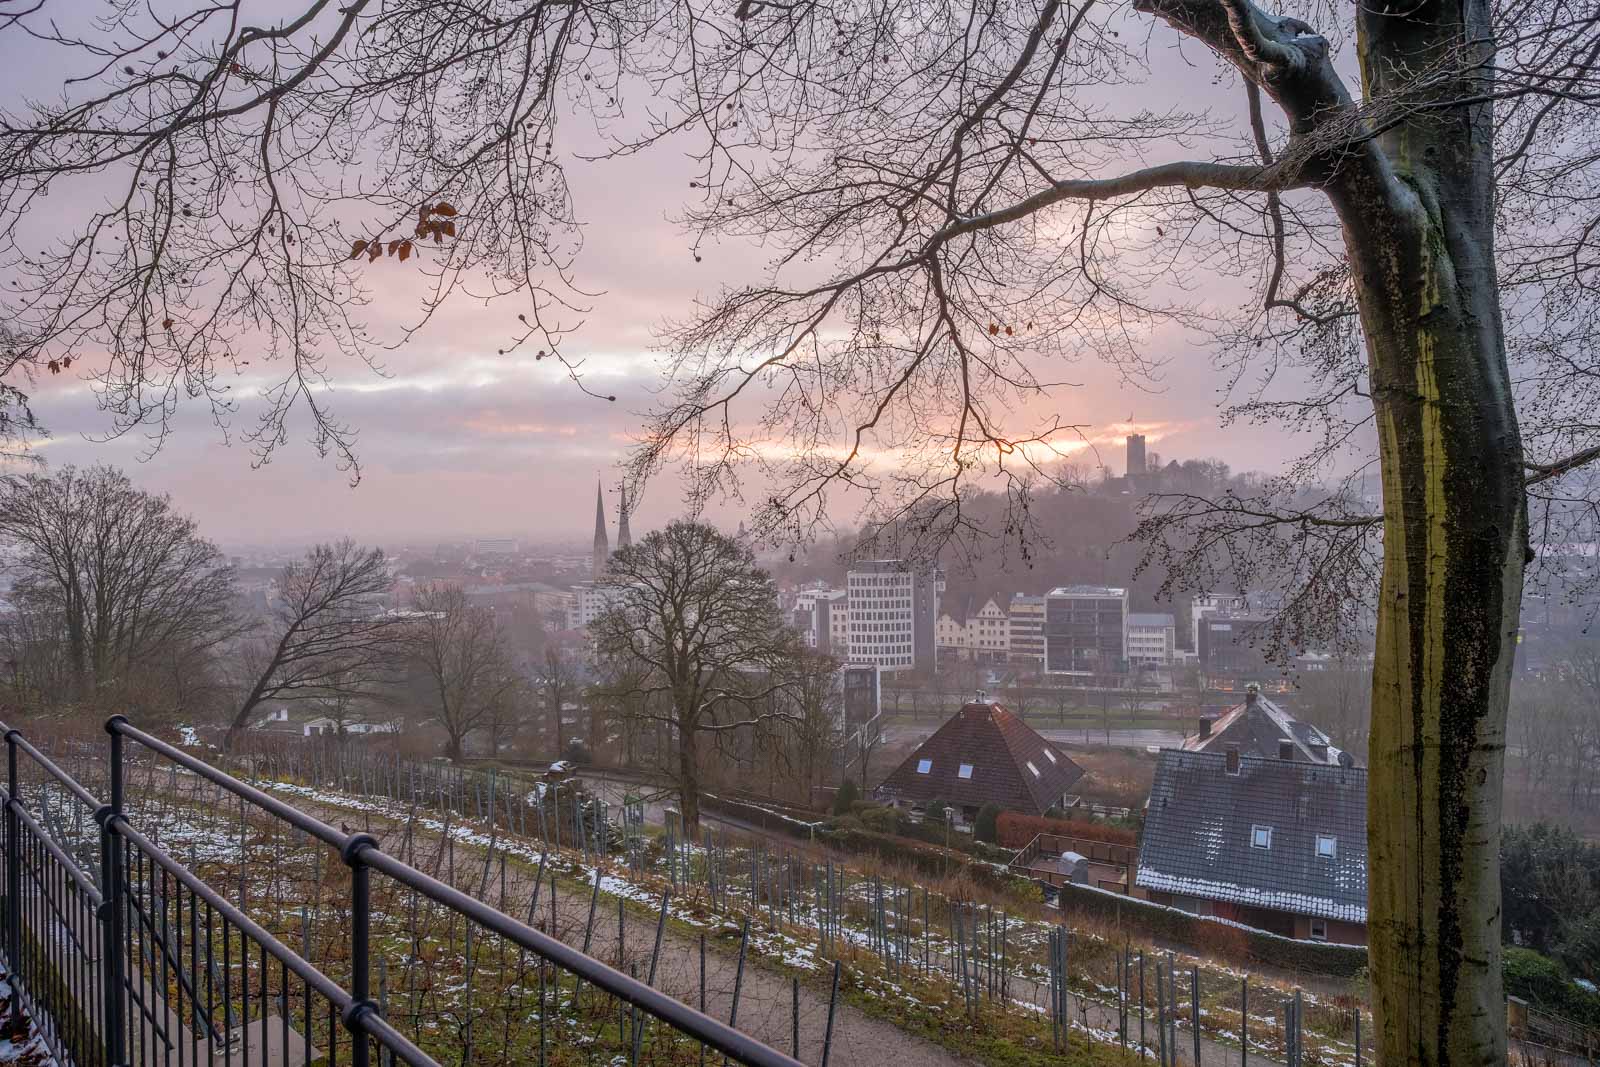 Winter morning in January 2021 on the 'Johannisberg' shortly after sunrise (Bielefeld, Germany).